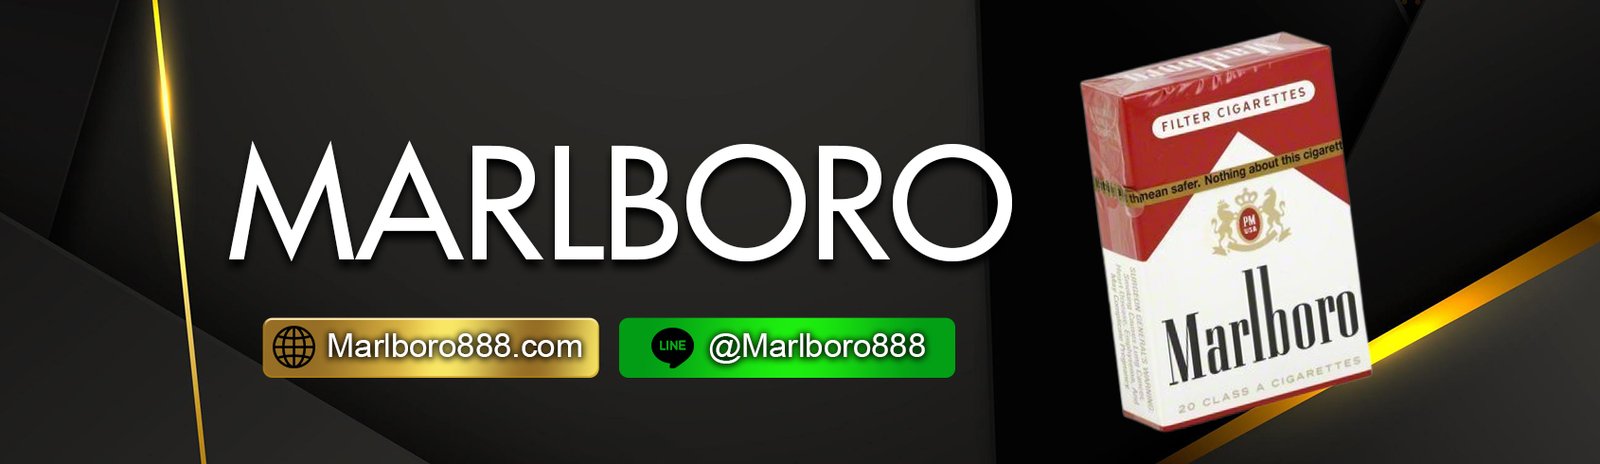 Marlboro888 banner3